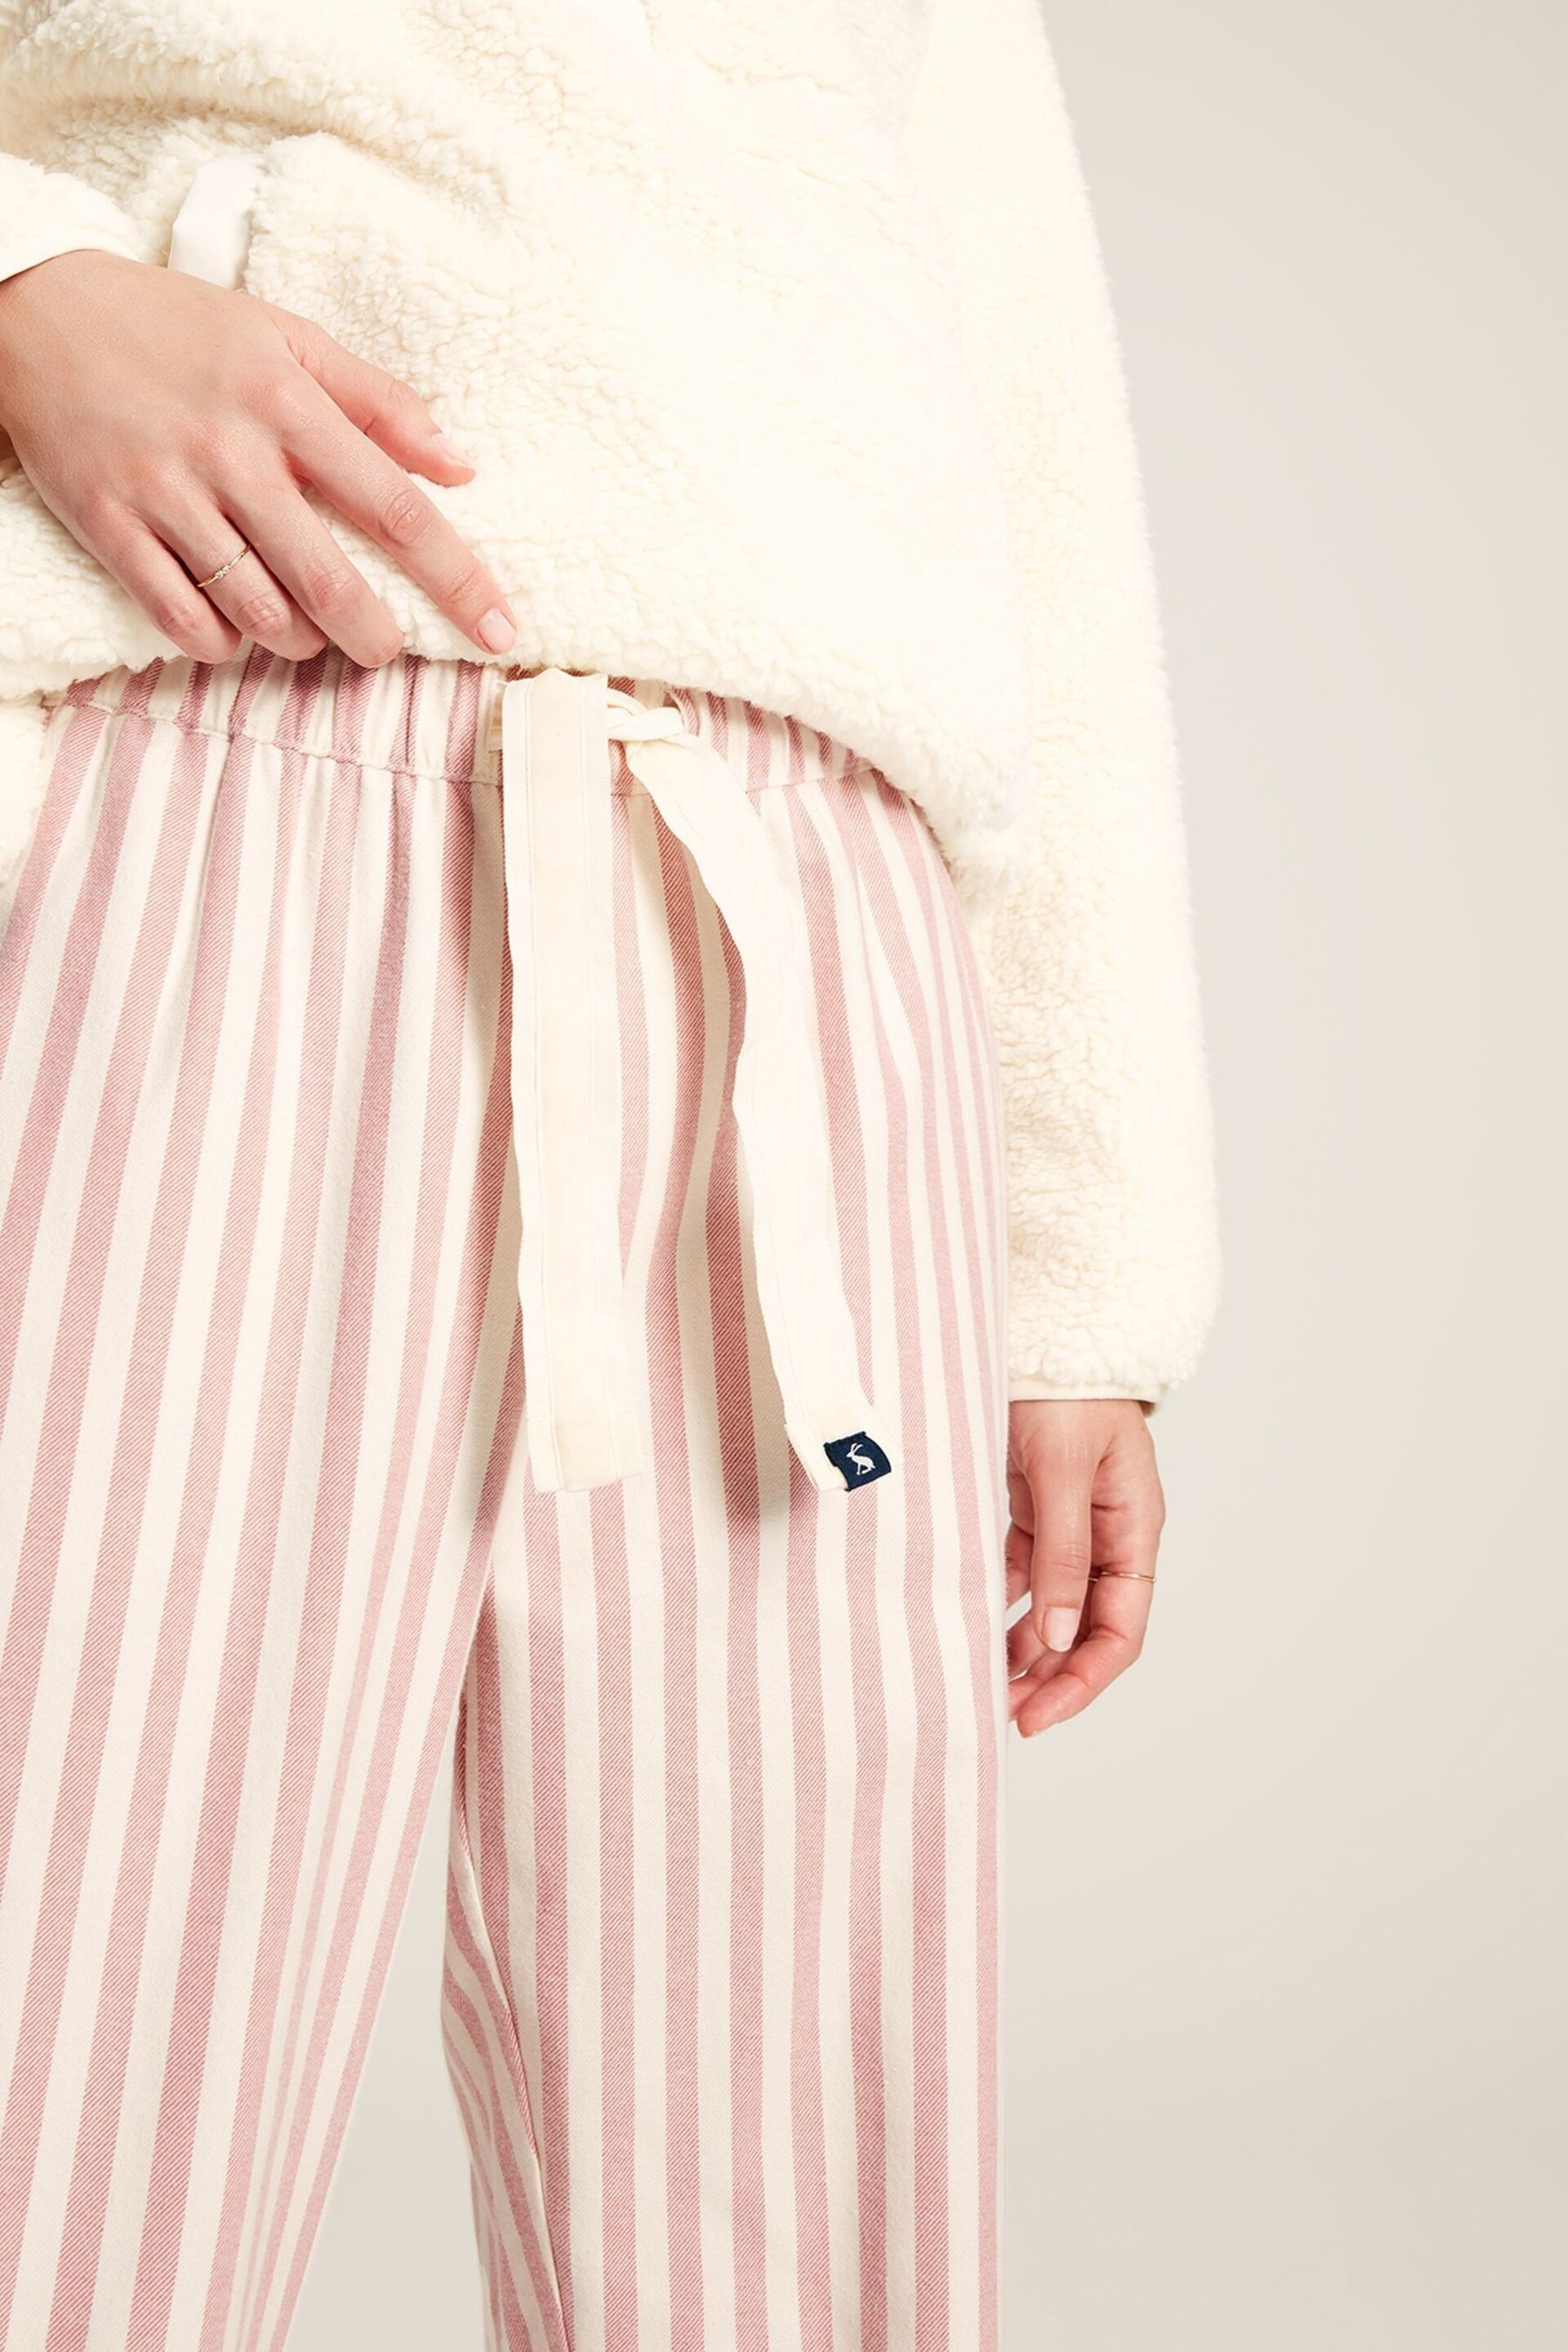 Joules Stella Pink Striped Cotton Pyjama Bottoms - Image 4 of 7